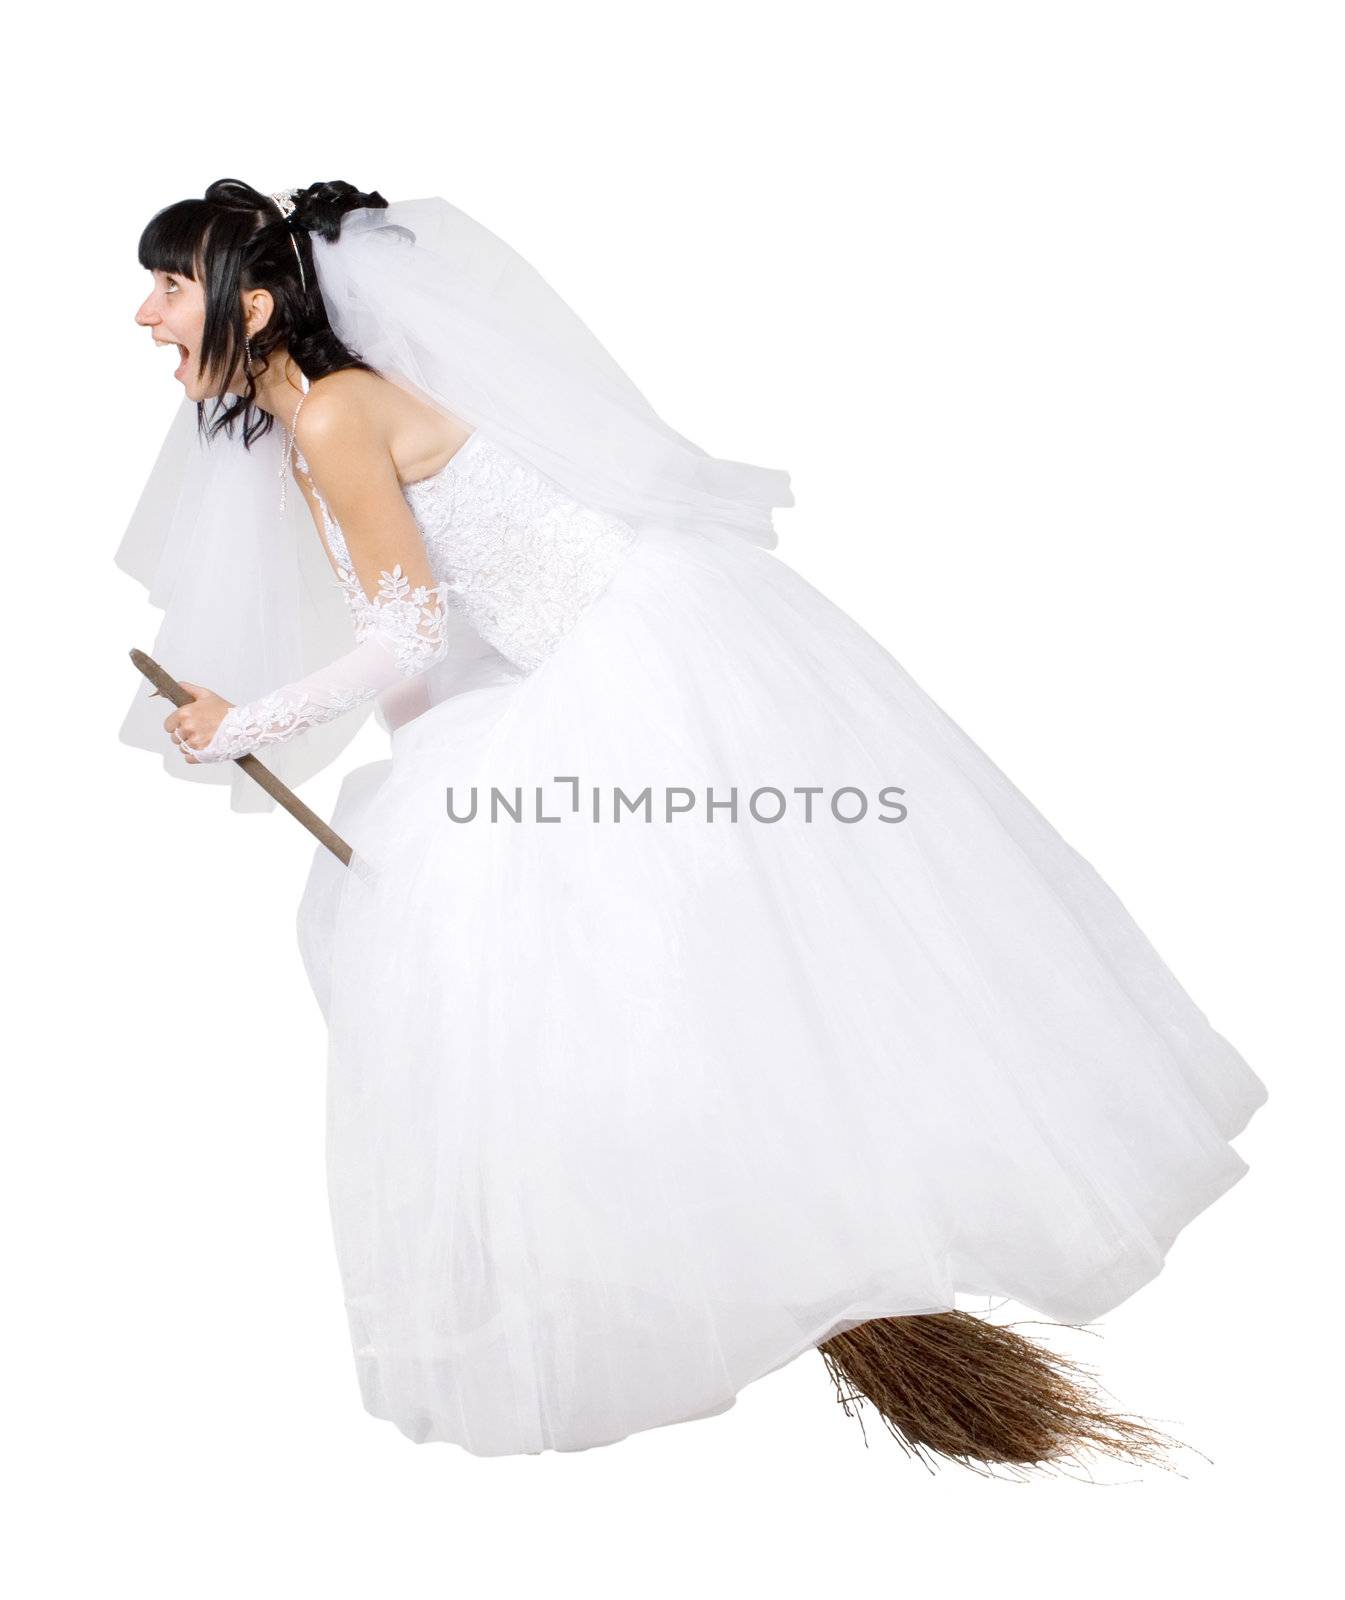 bride in white wedding dress on a broom by aptyp_kok